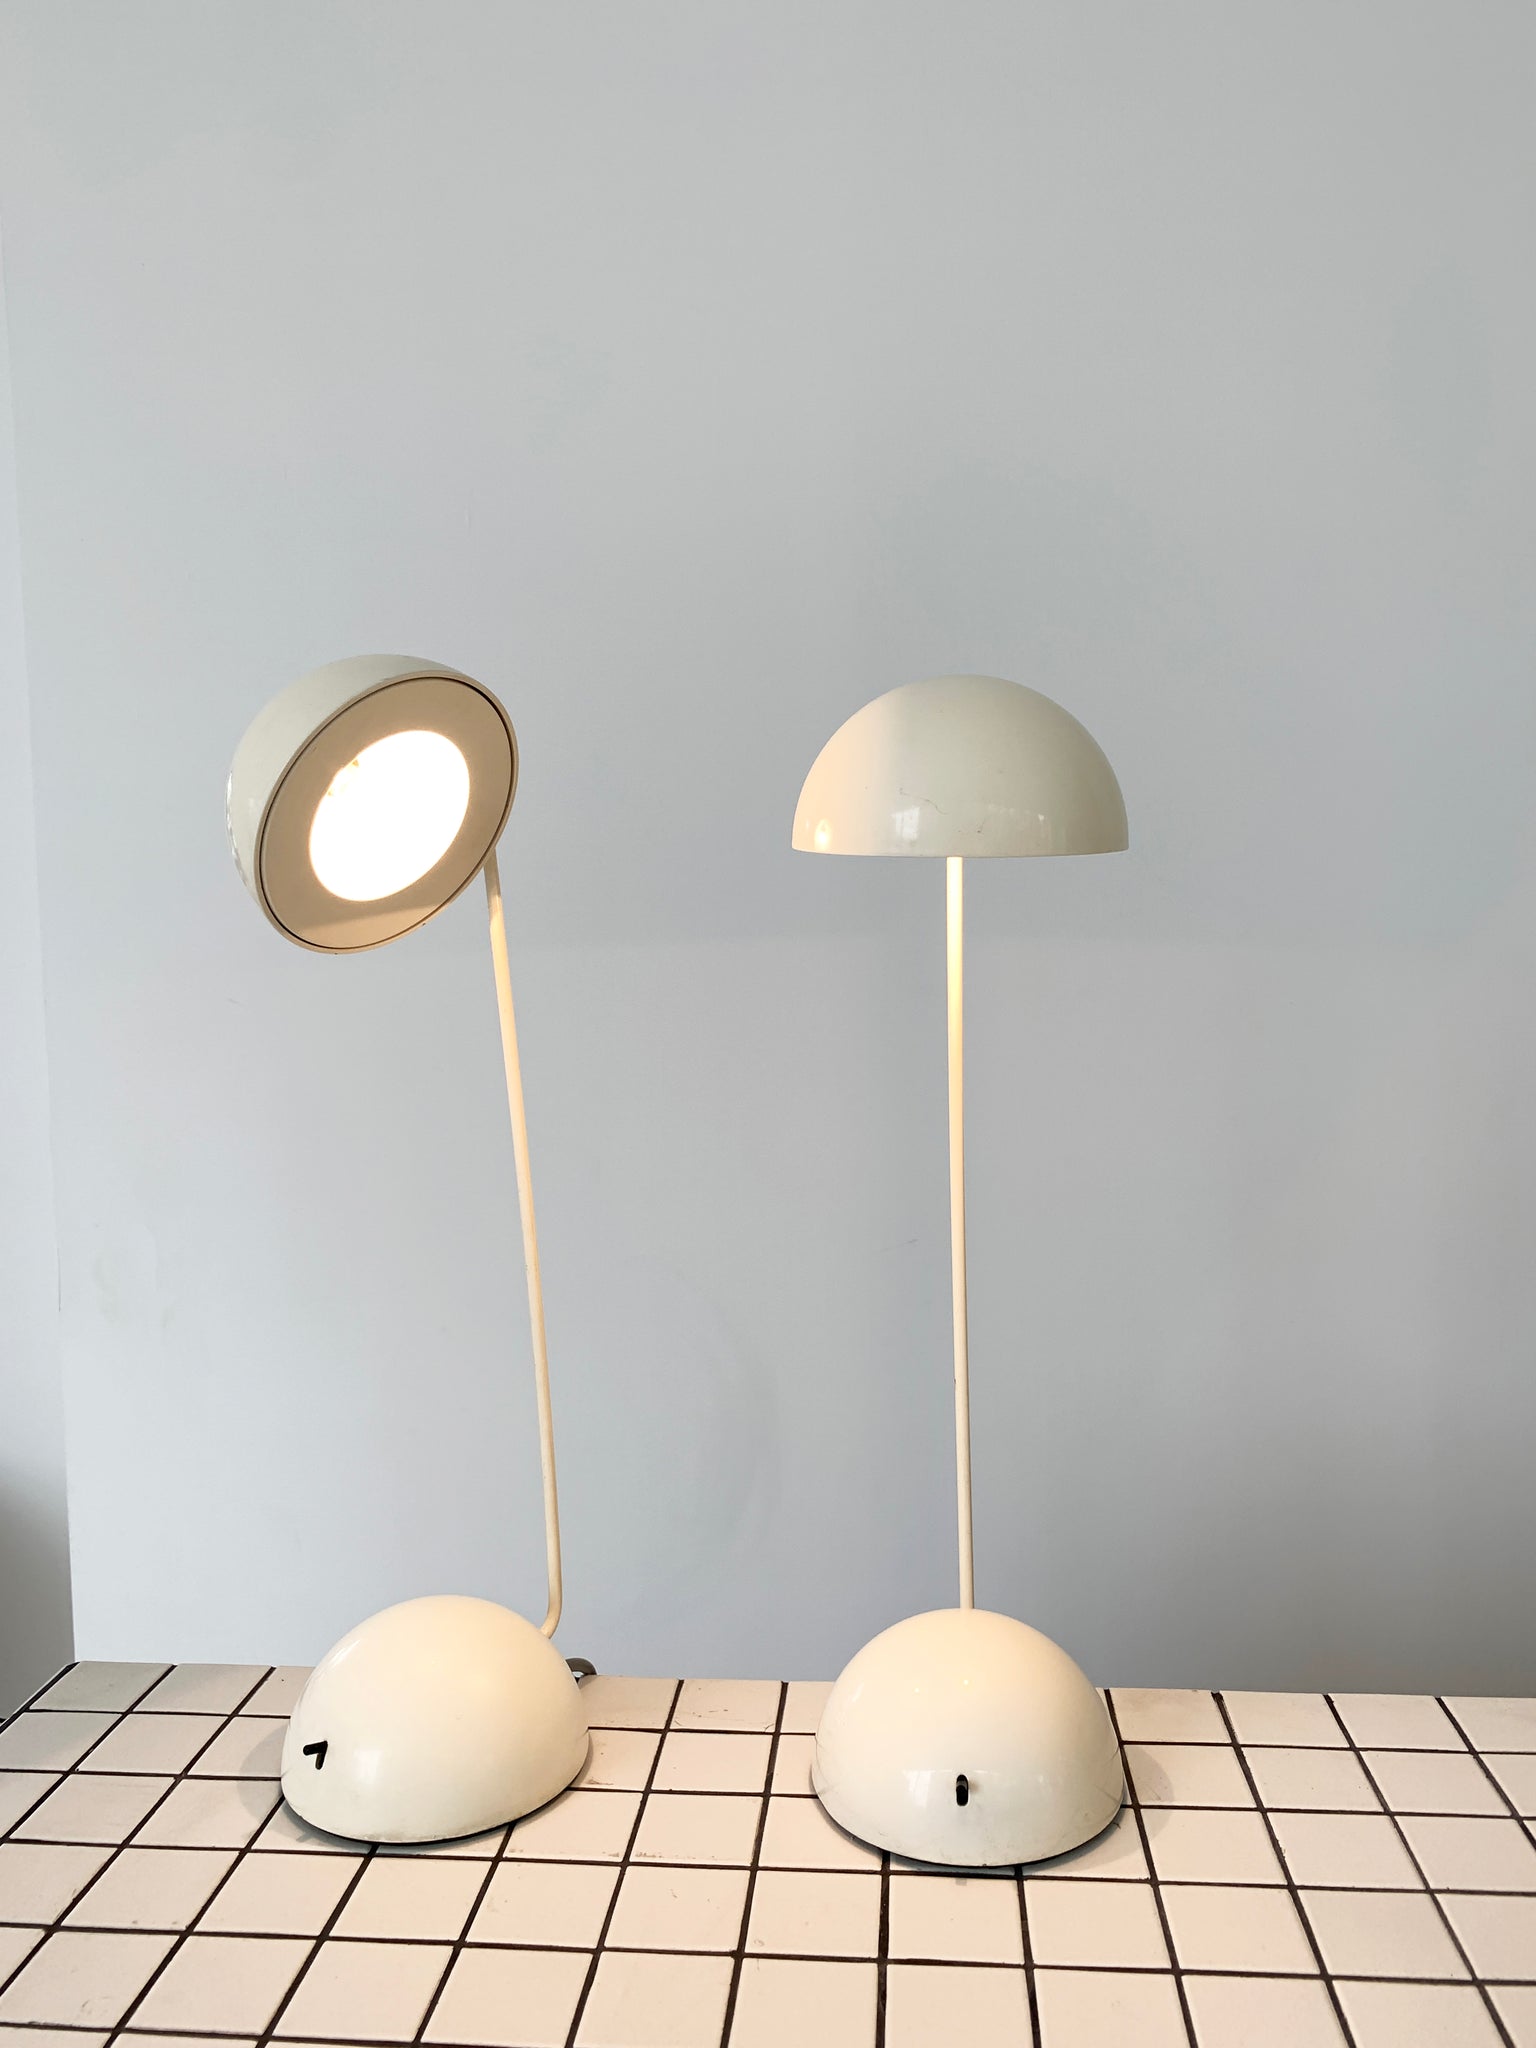 Cream 1981 Tronconi Illuminazione "Minikini / Bikini" Table Lamp by Barbieri & Marianelli